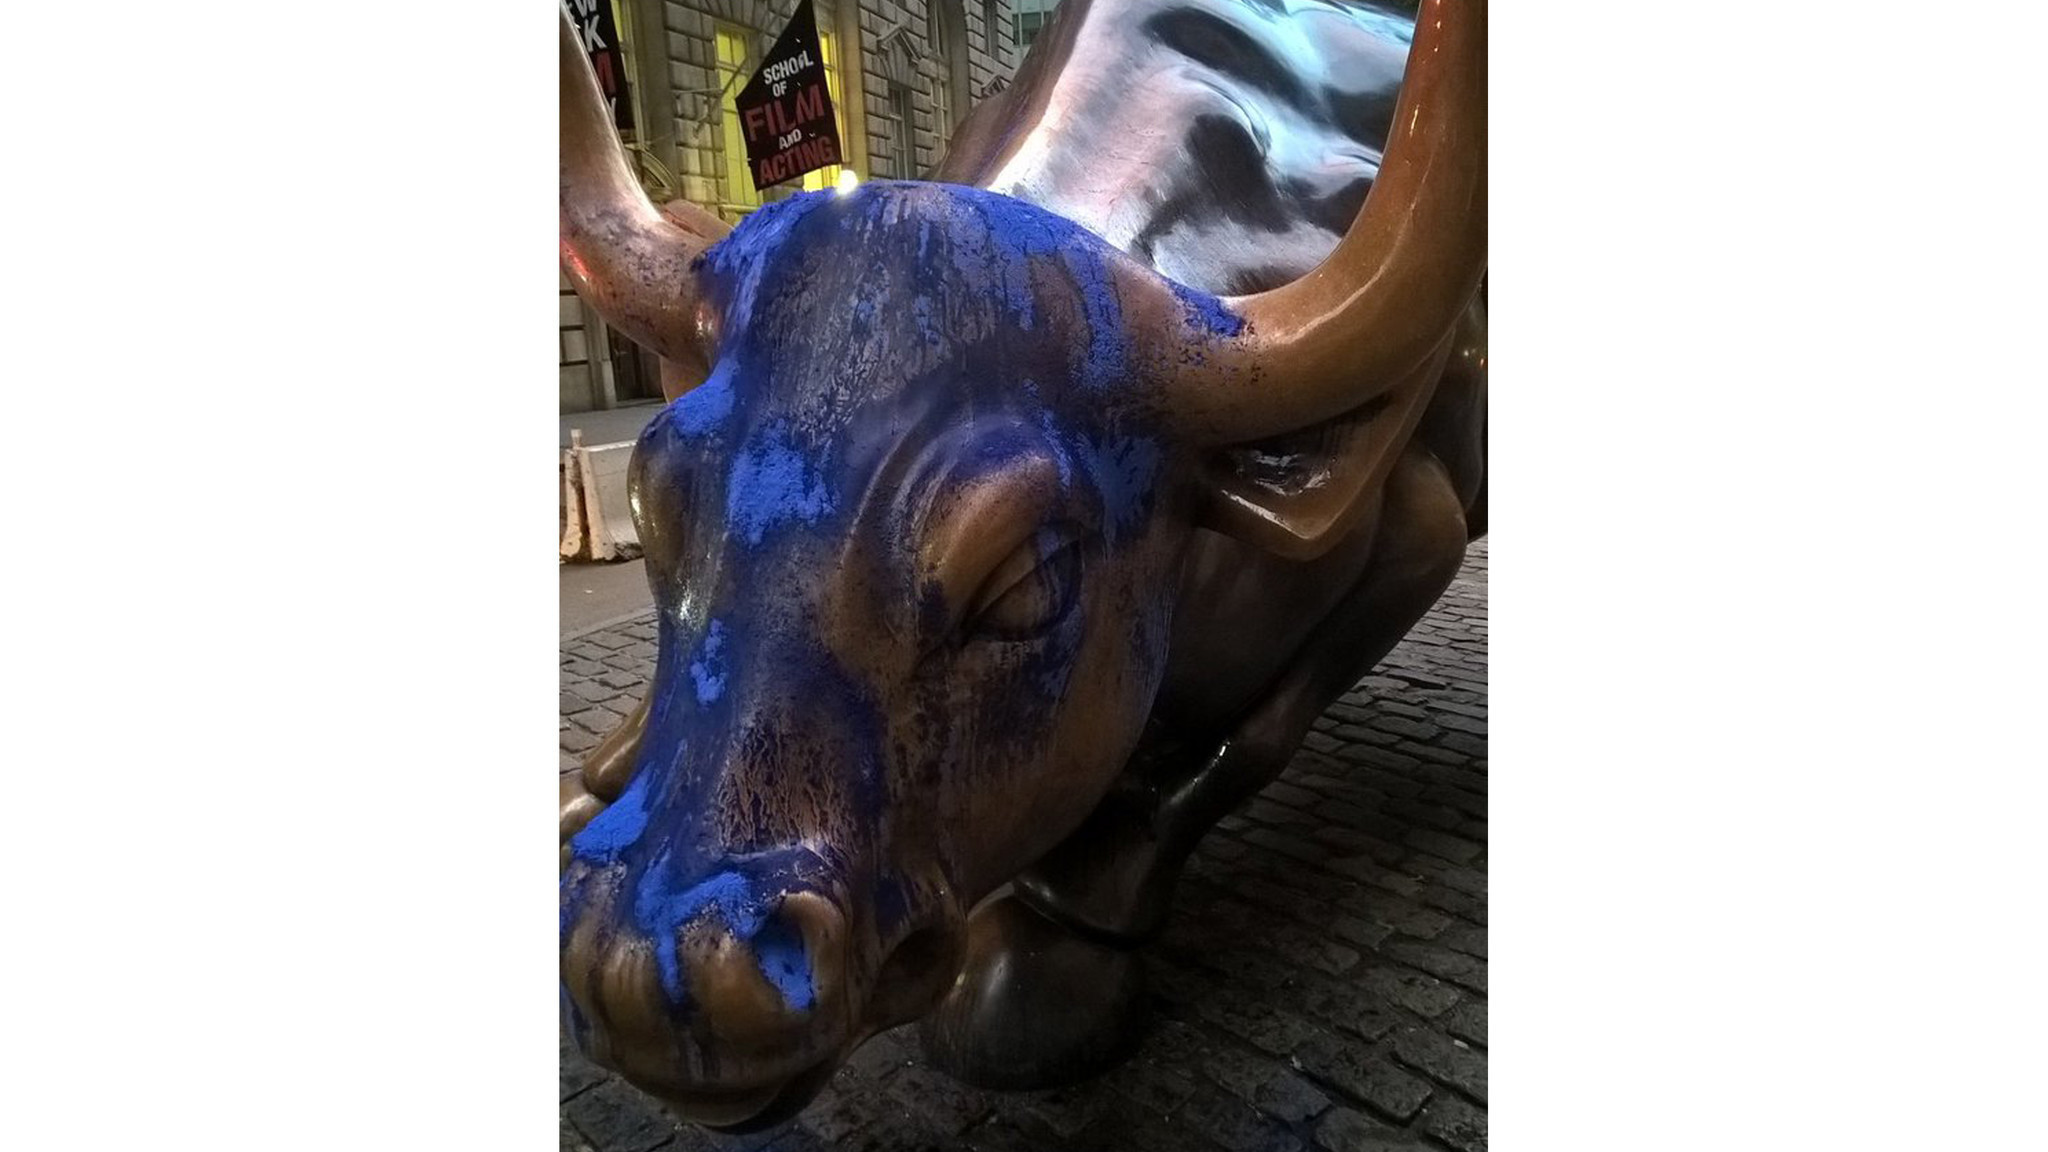 2048x1152 Blue paint is dumped on Wall Street 'Charging Bull' statue's head - LA Times